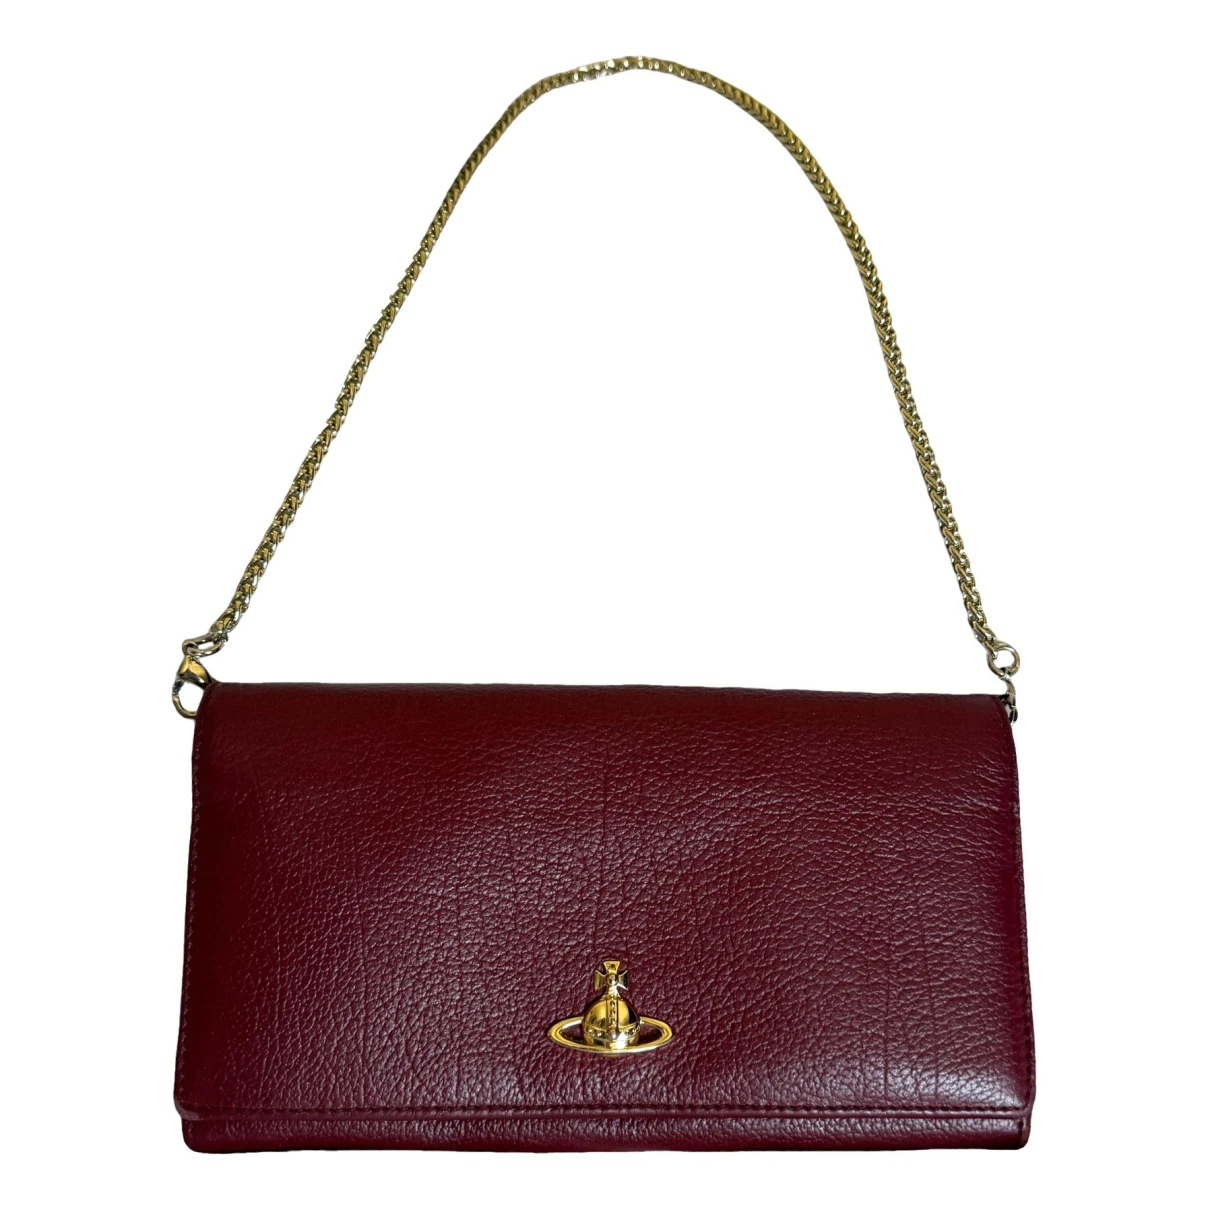 Pre-owned Vivienne Westwood Leather Wallet In Burgundy